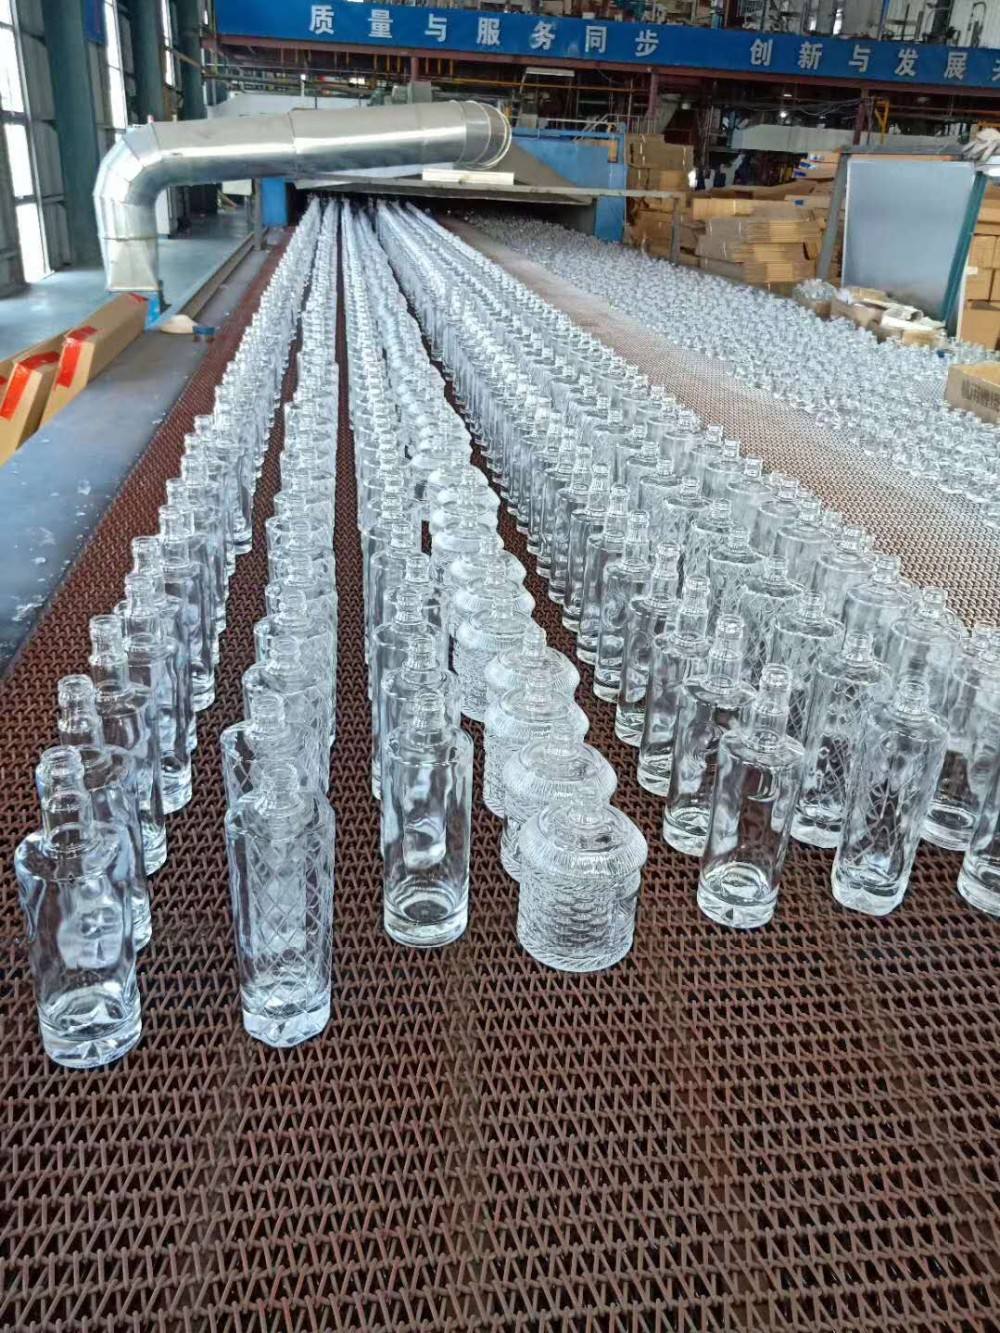 Glass Bottles 500Ml Brandy Liquor Glass Bottle Wine Clear Screw Cap Cork Luxury Customized for XO & Brandy